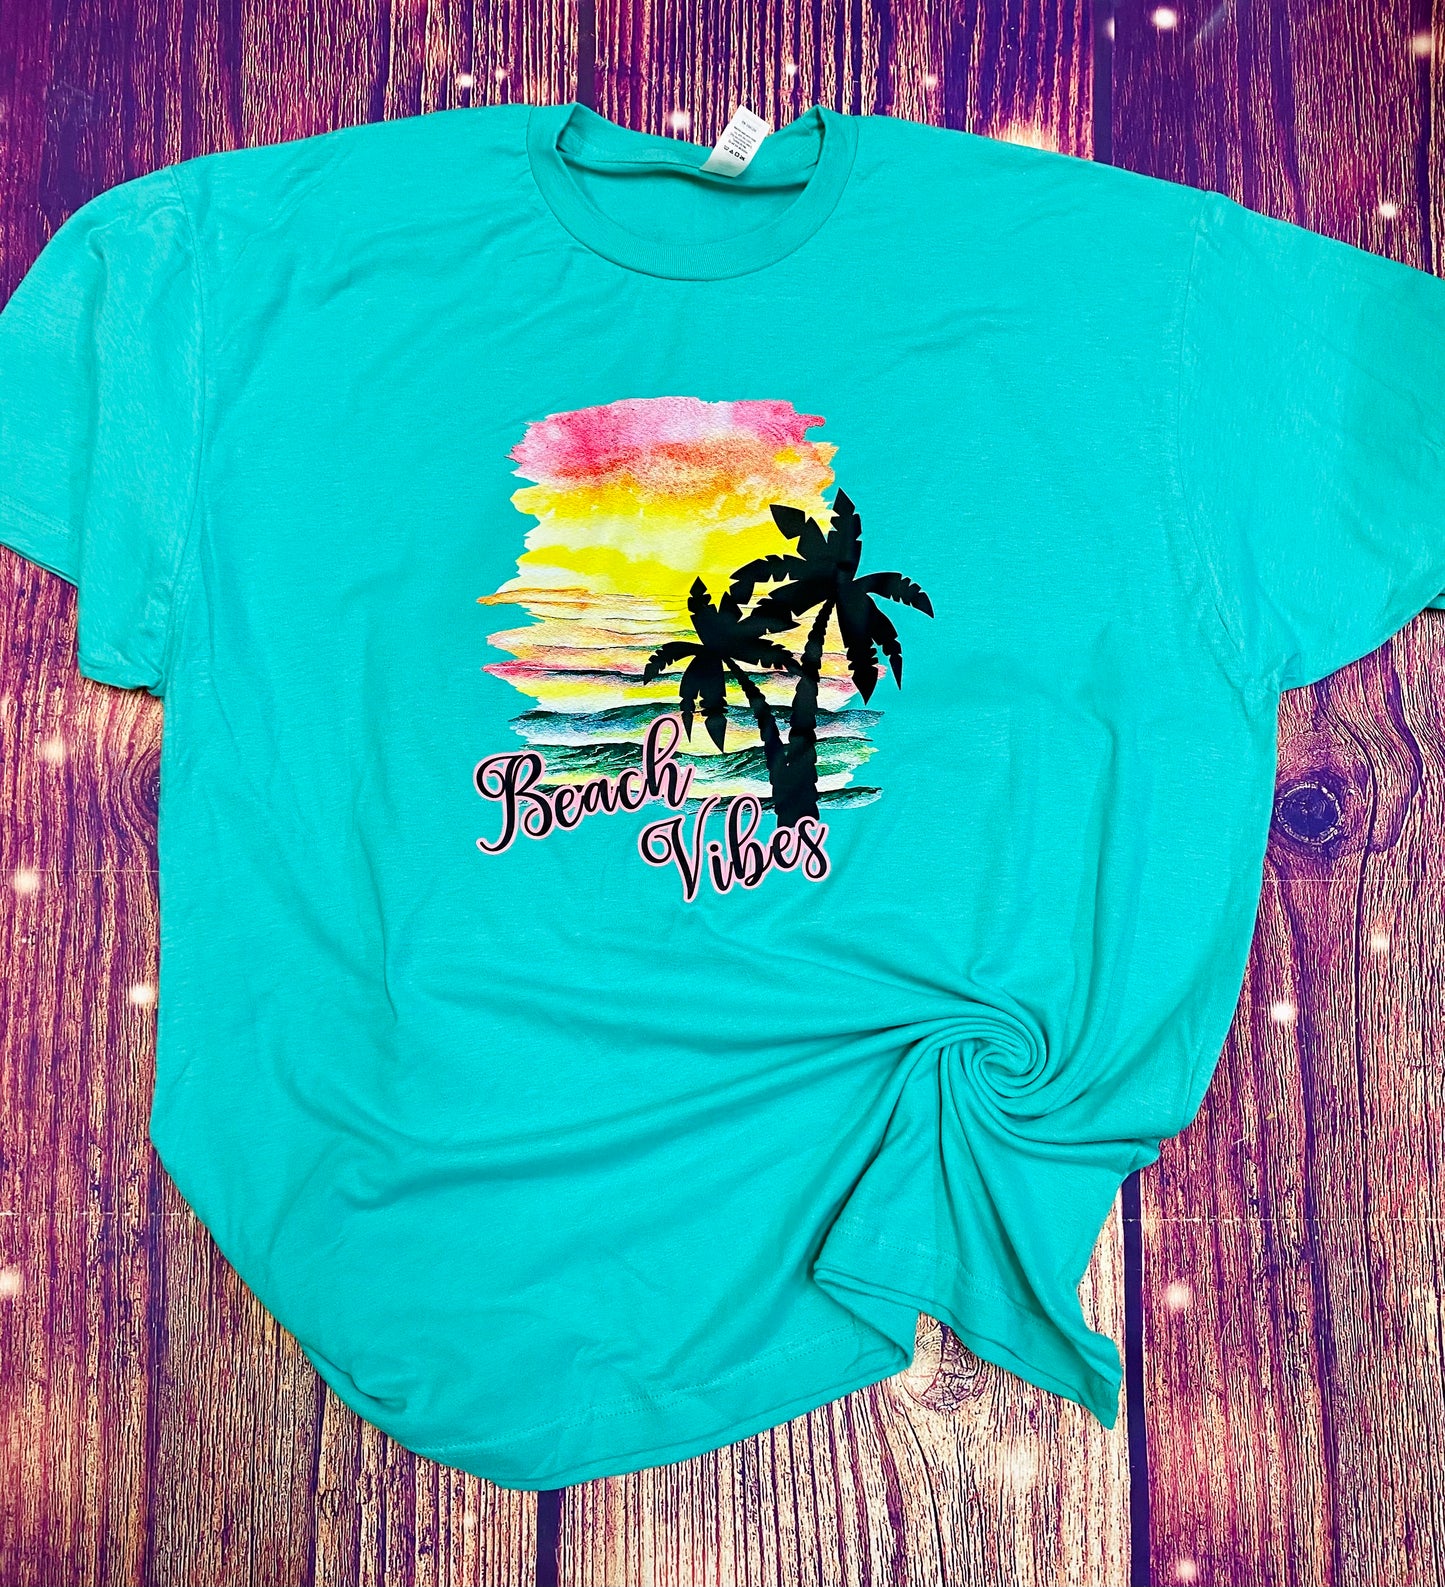 Beach Vibes screen Printed Shirt